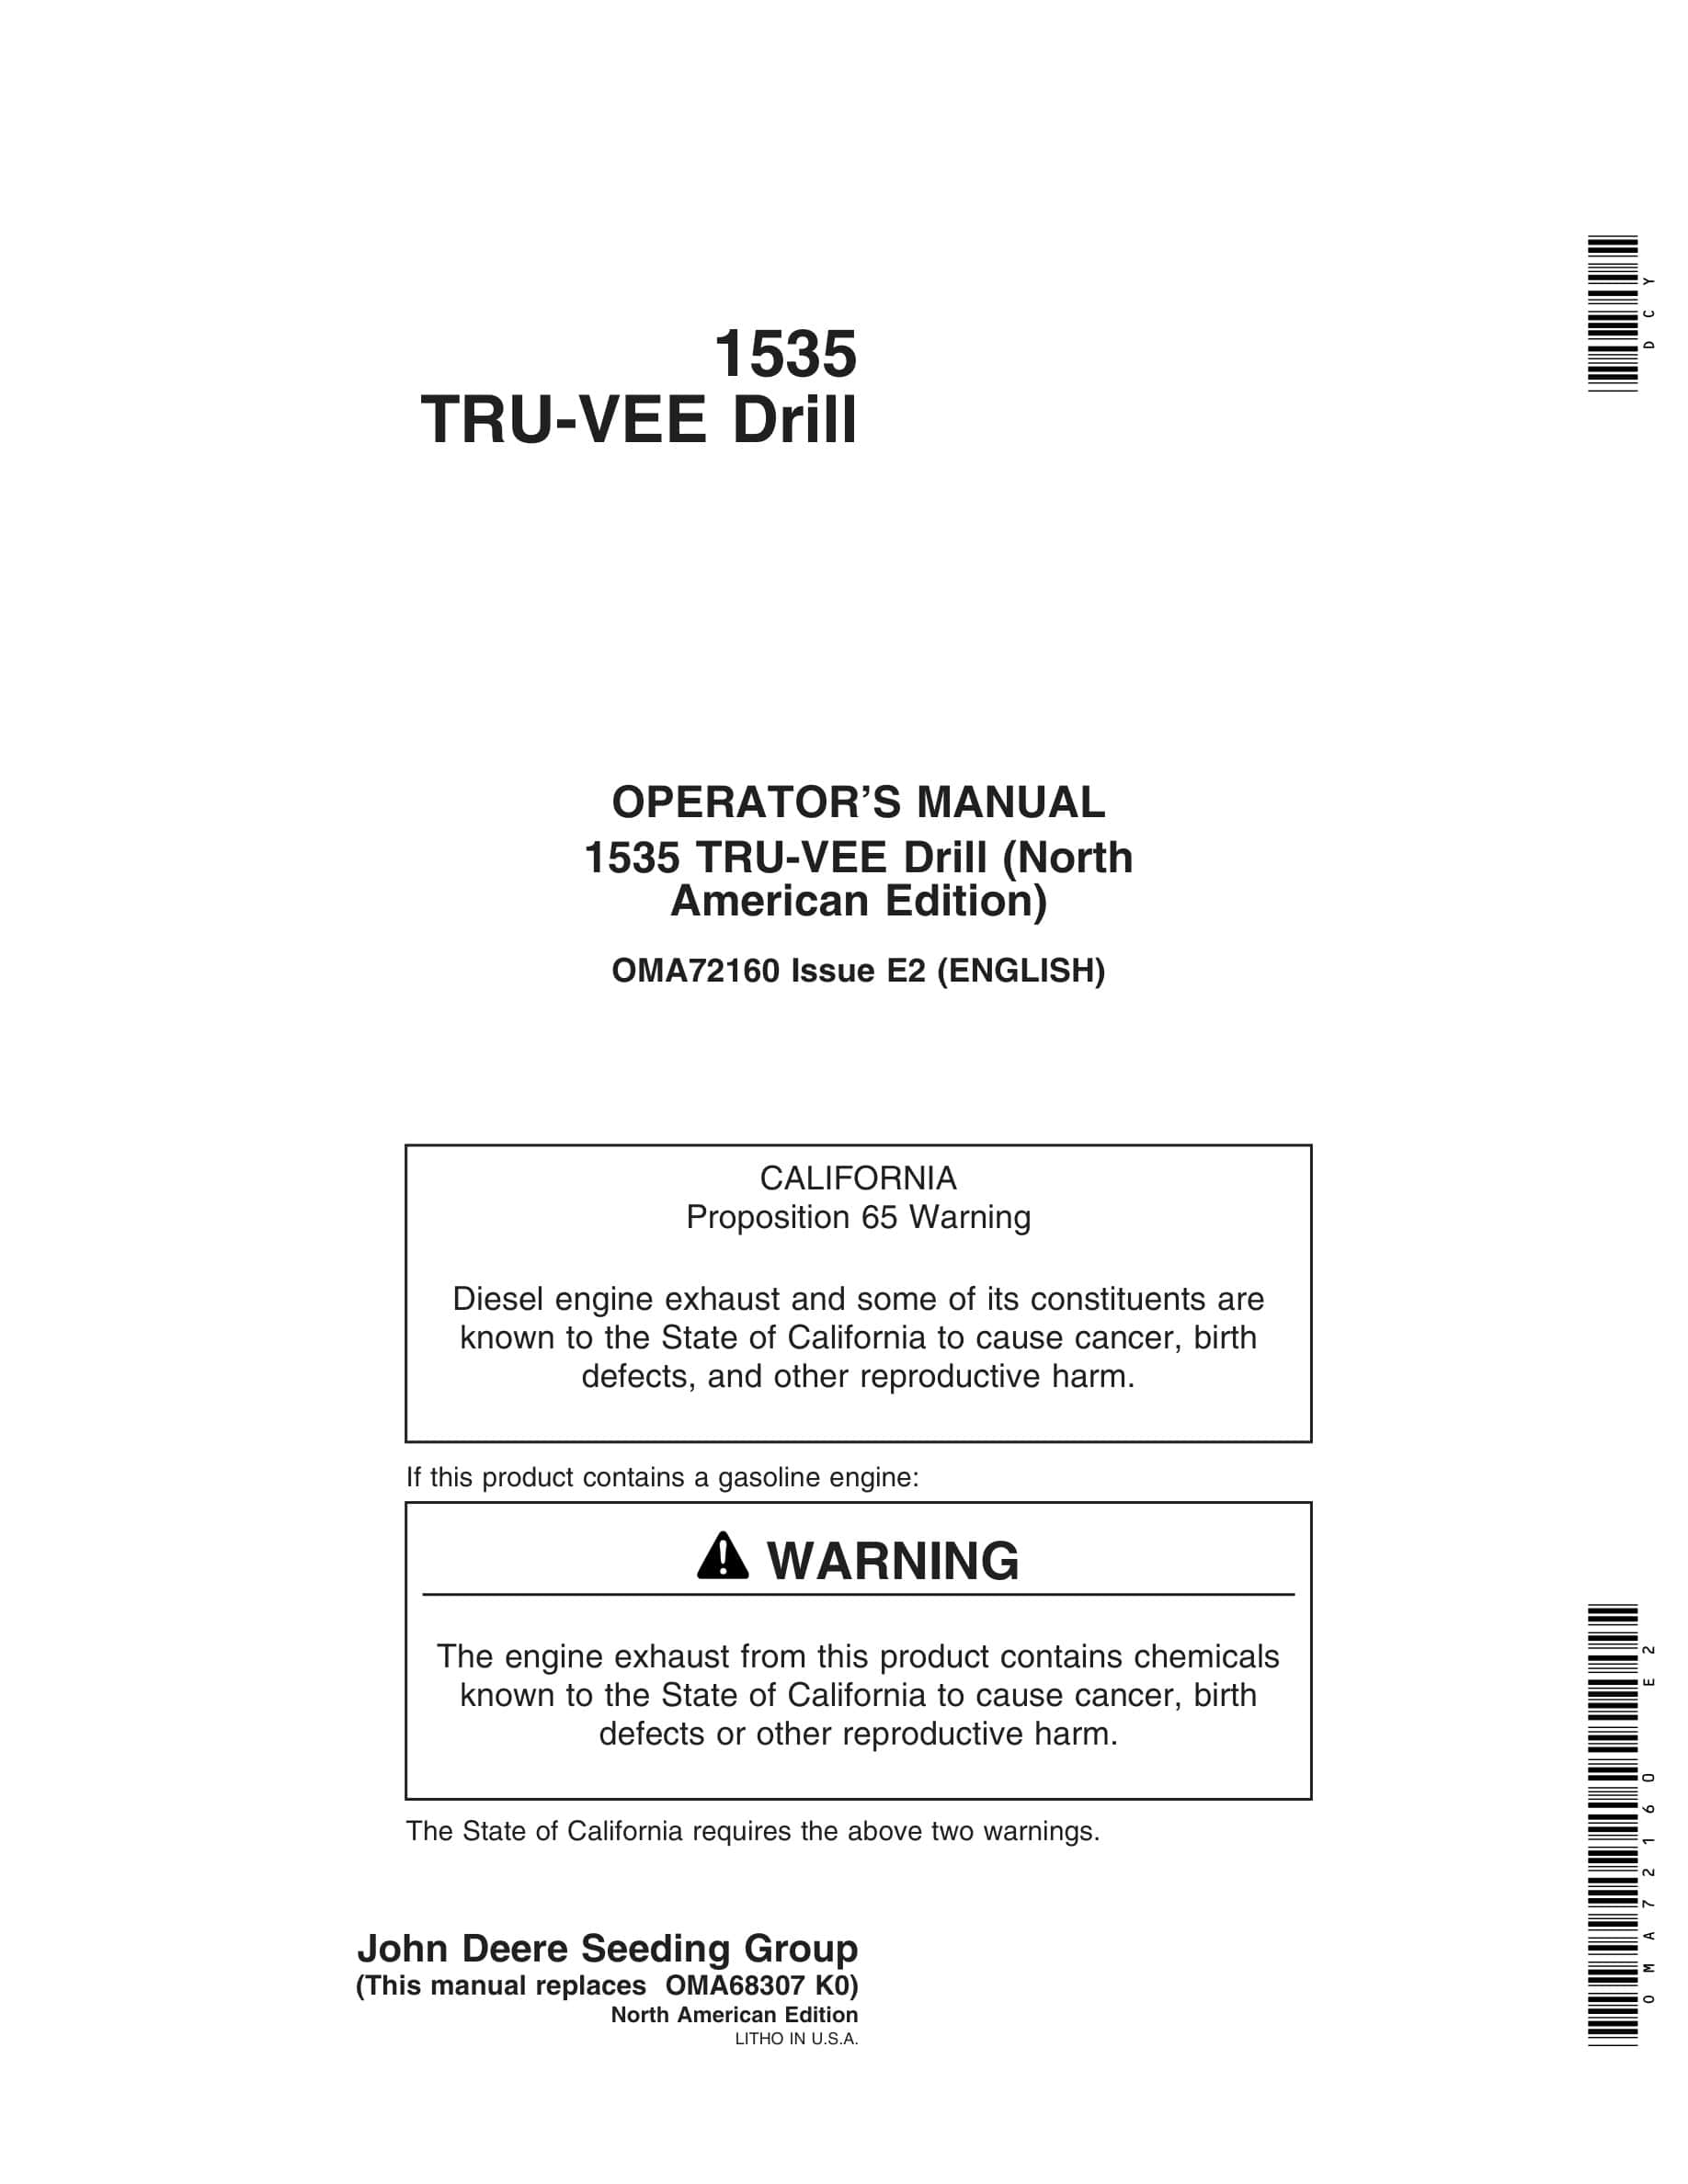 John Deere 1535 TRU-VEE Drill Operator Manual OMA72160-1